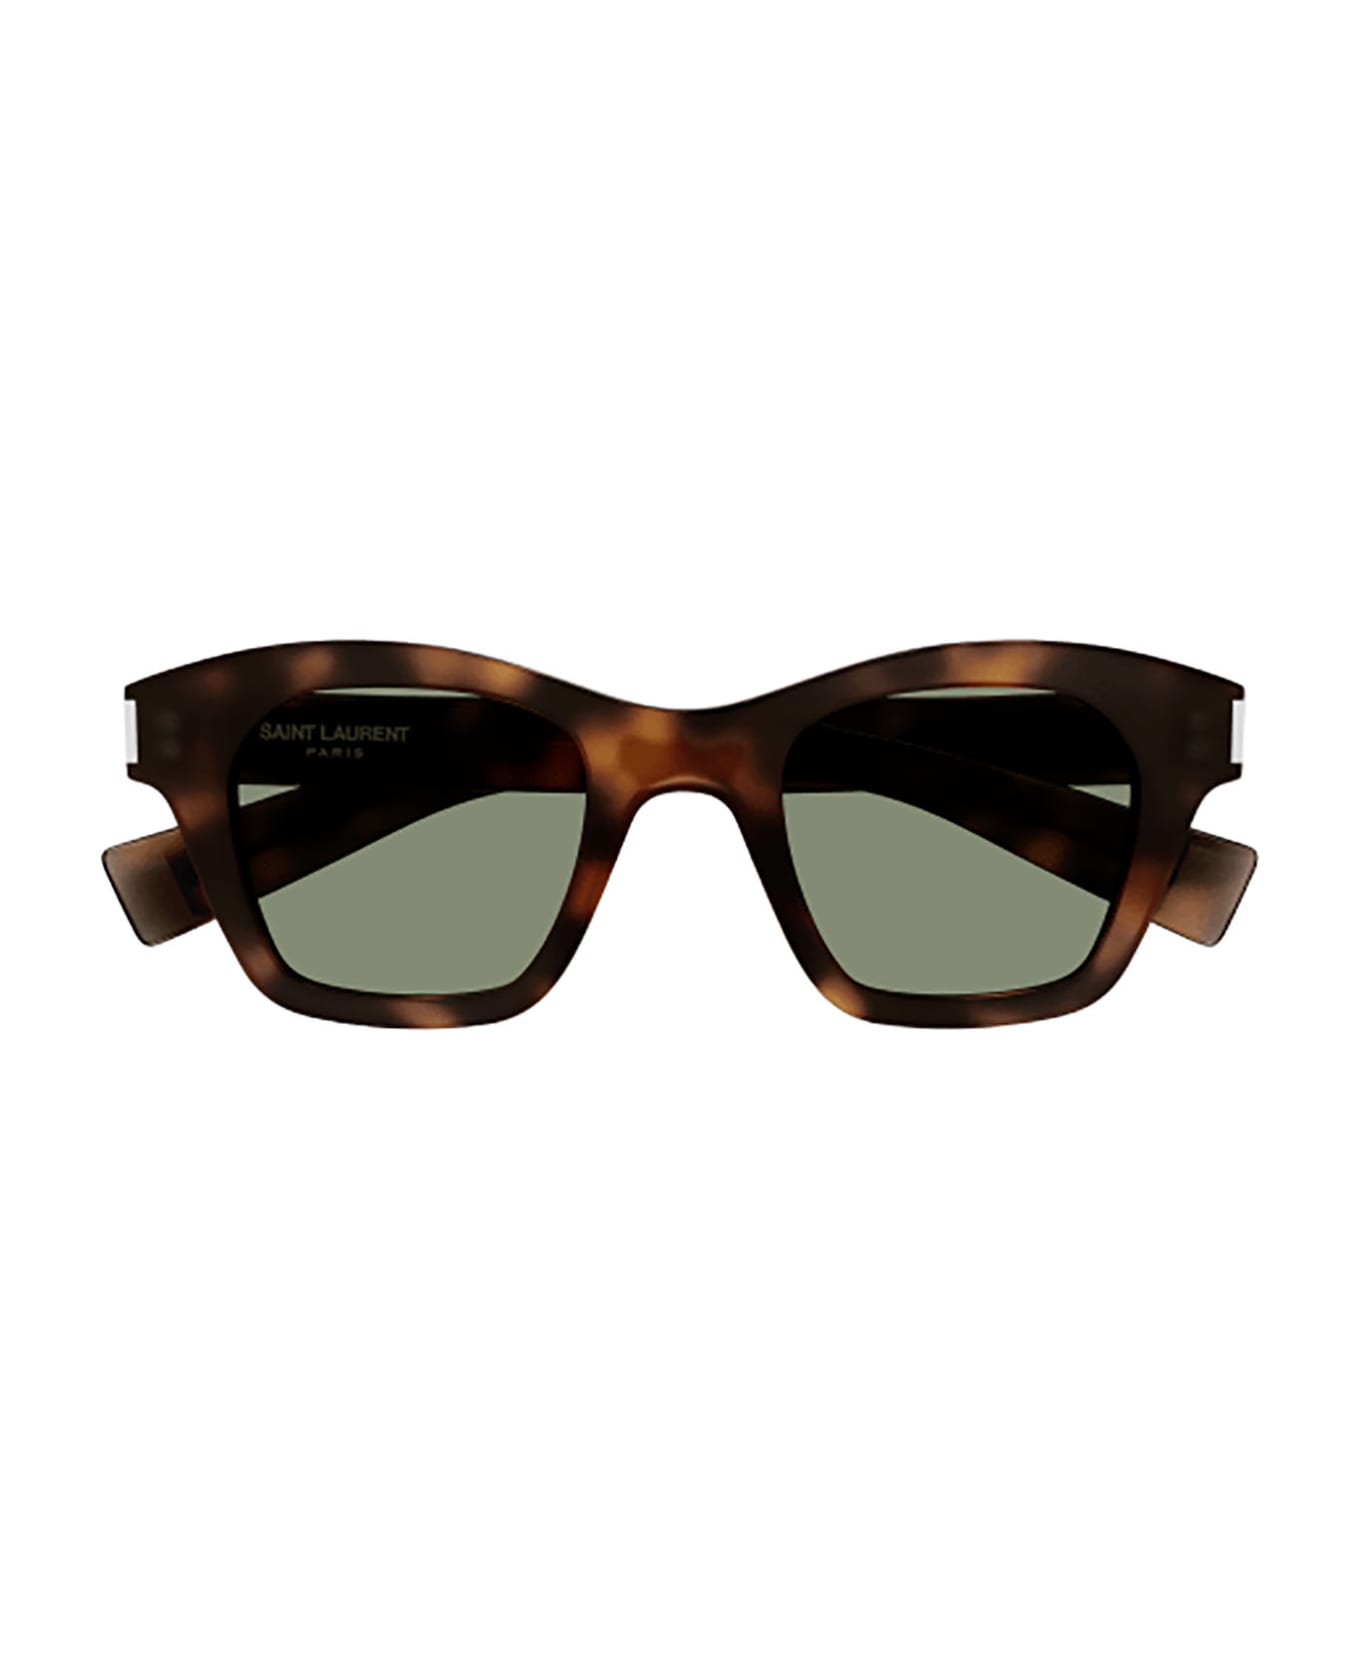 Saint Laurent Eyewear Sl 592 Sunglasses - 003 havana havana green サングラス